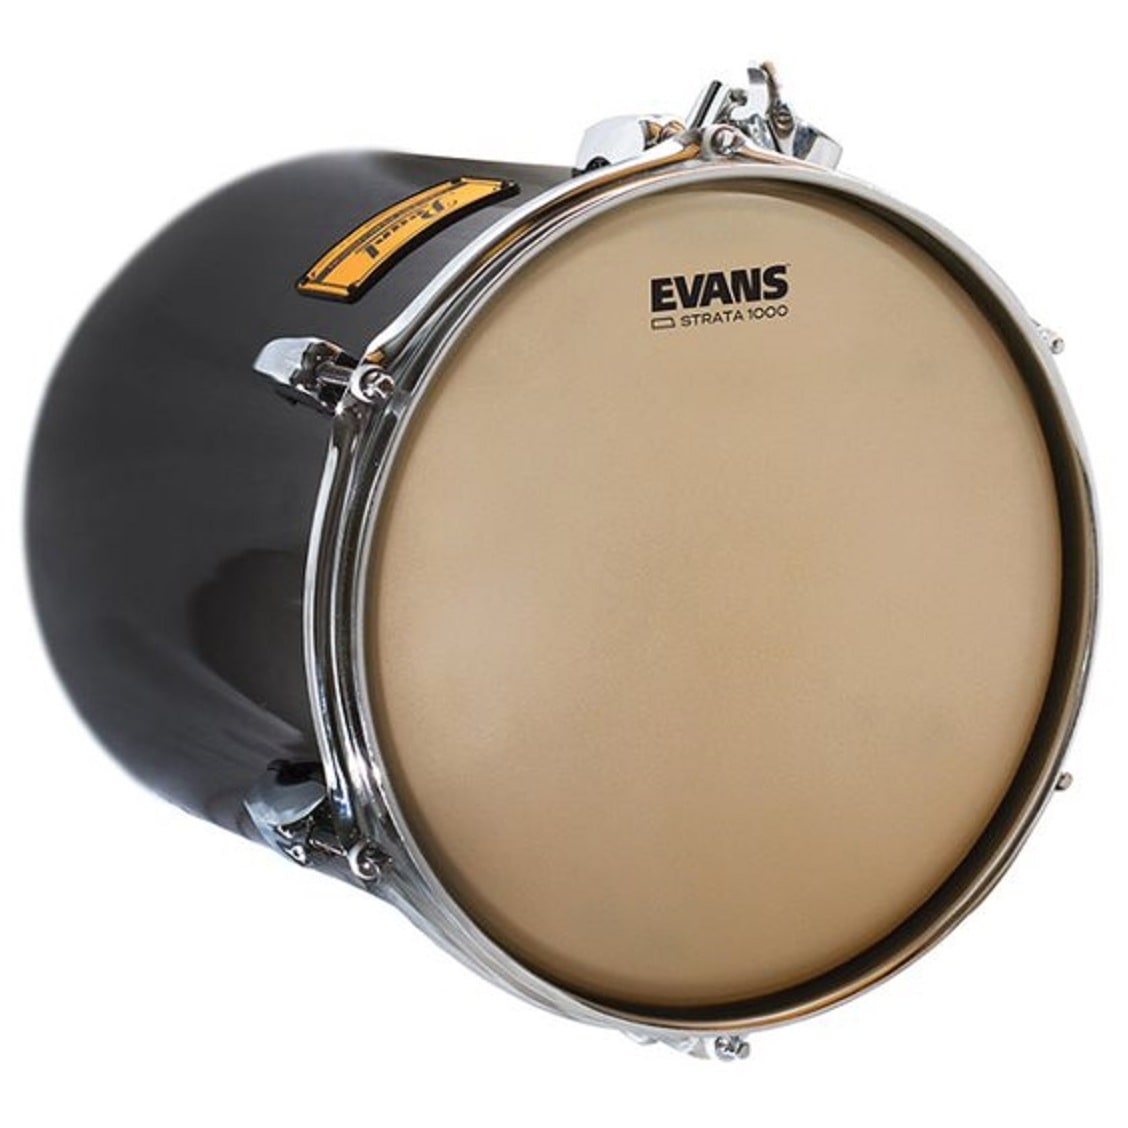 Evans CT12S - Strata 1000 Concert Drum Head, 12 Zoll 1